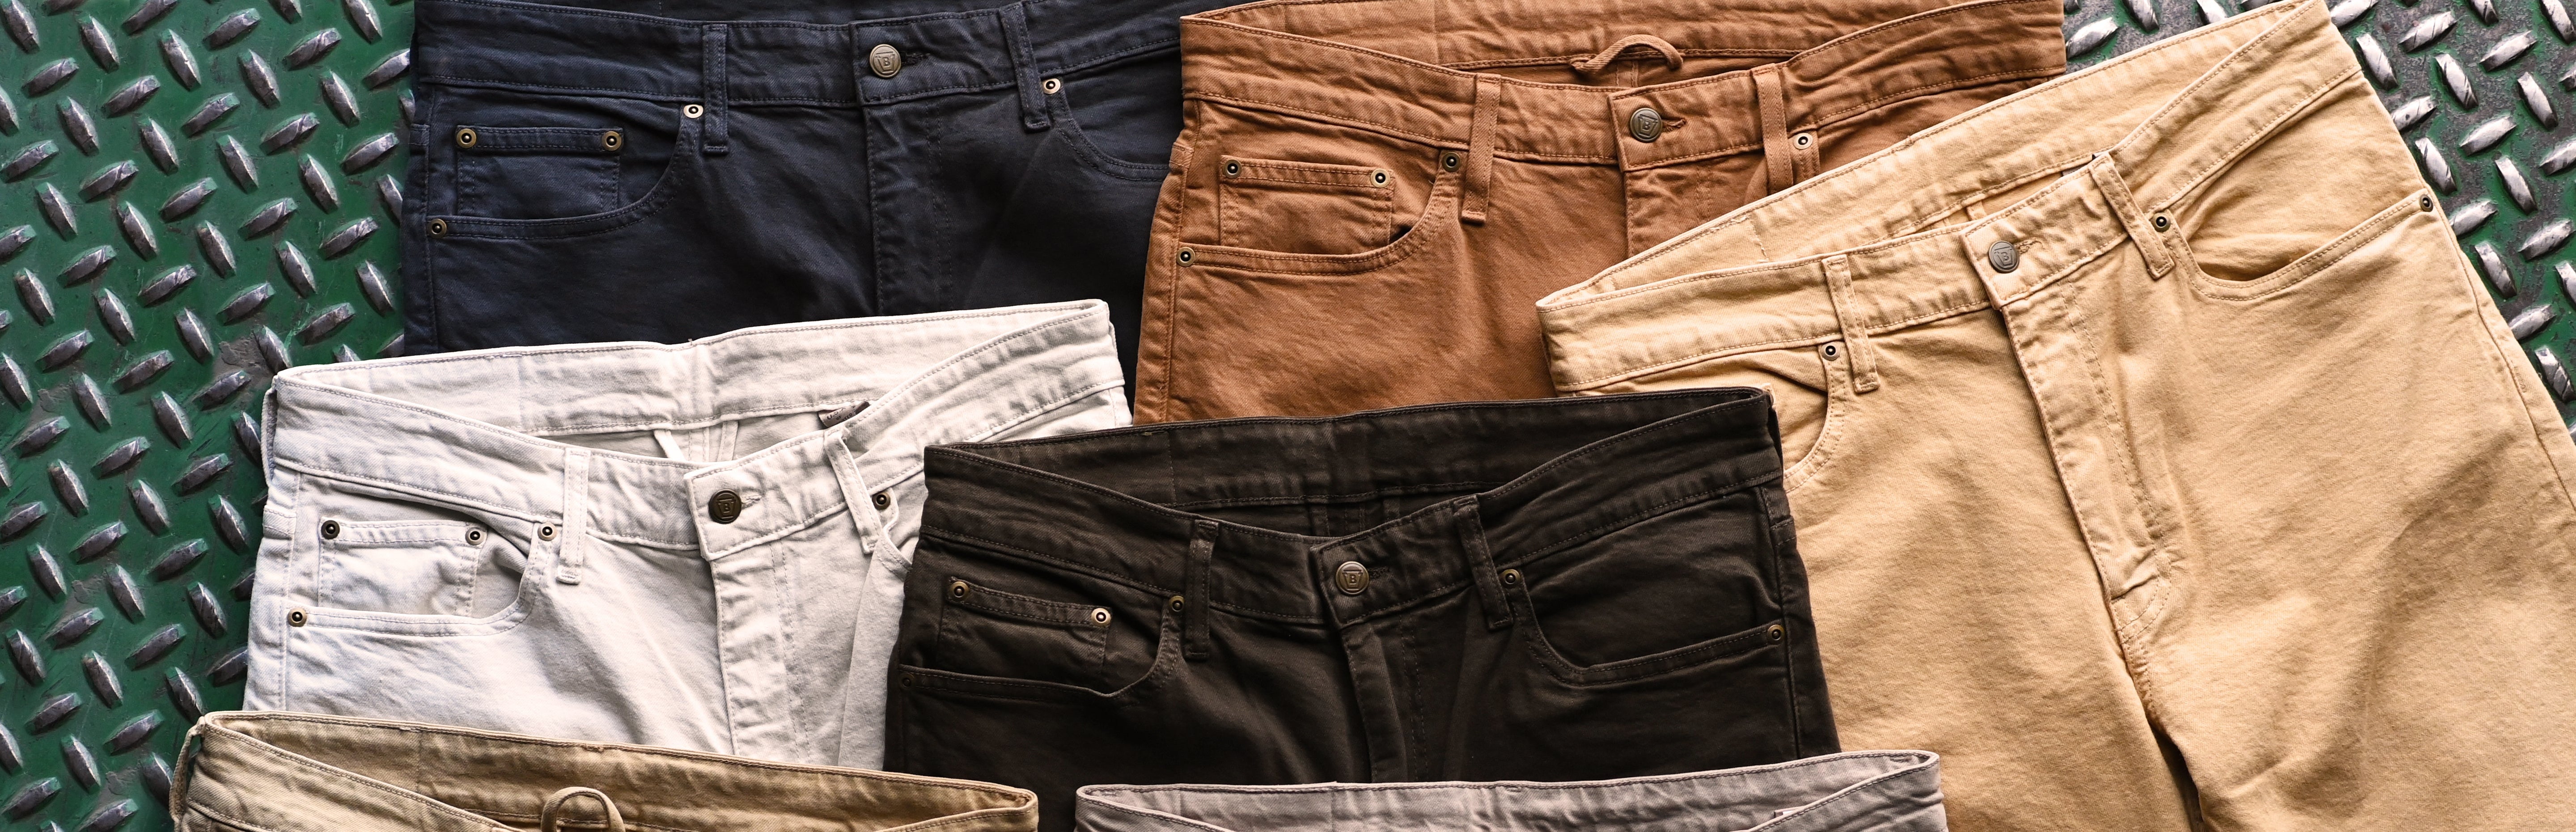 Men's 5 Pocket Pants & Khakis, Cut & Sewn in the U.S.A - Bills Khakis